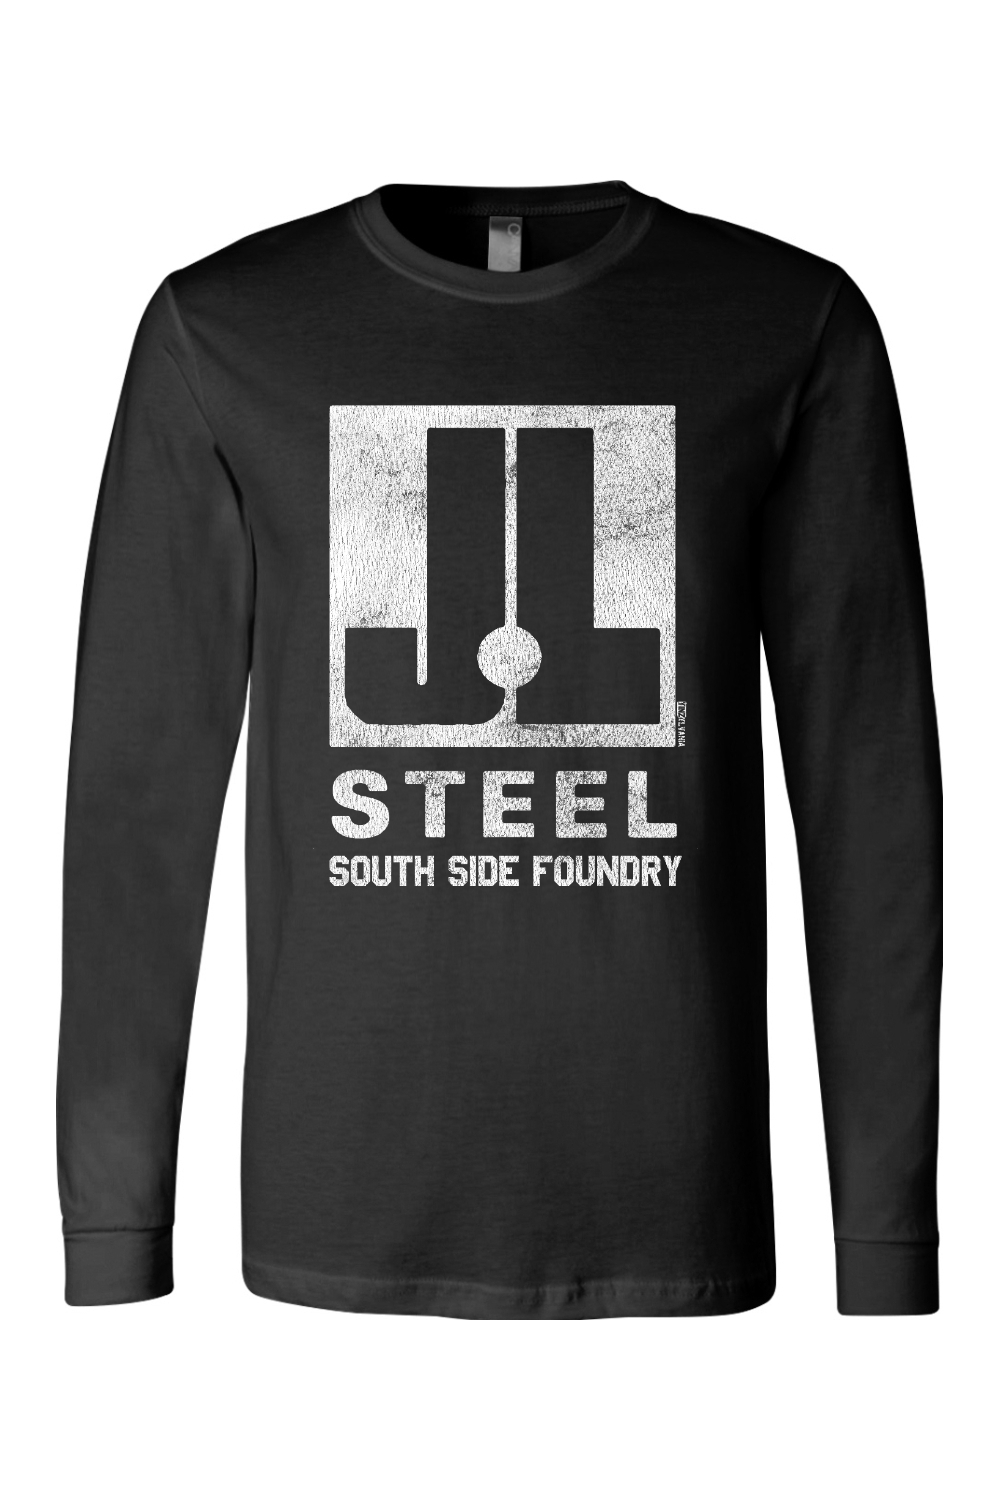 J&L Steel - South Side Foundry - Long Sleeve Tee - Yinzylvania